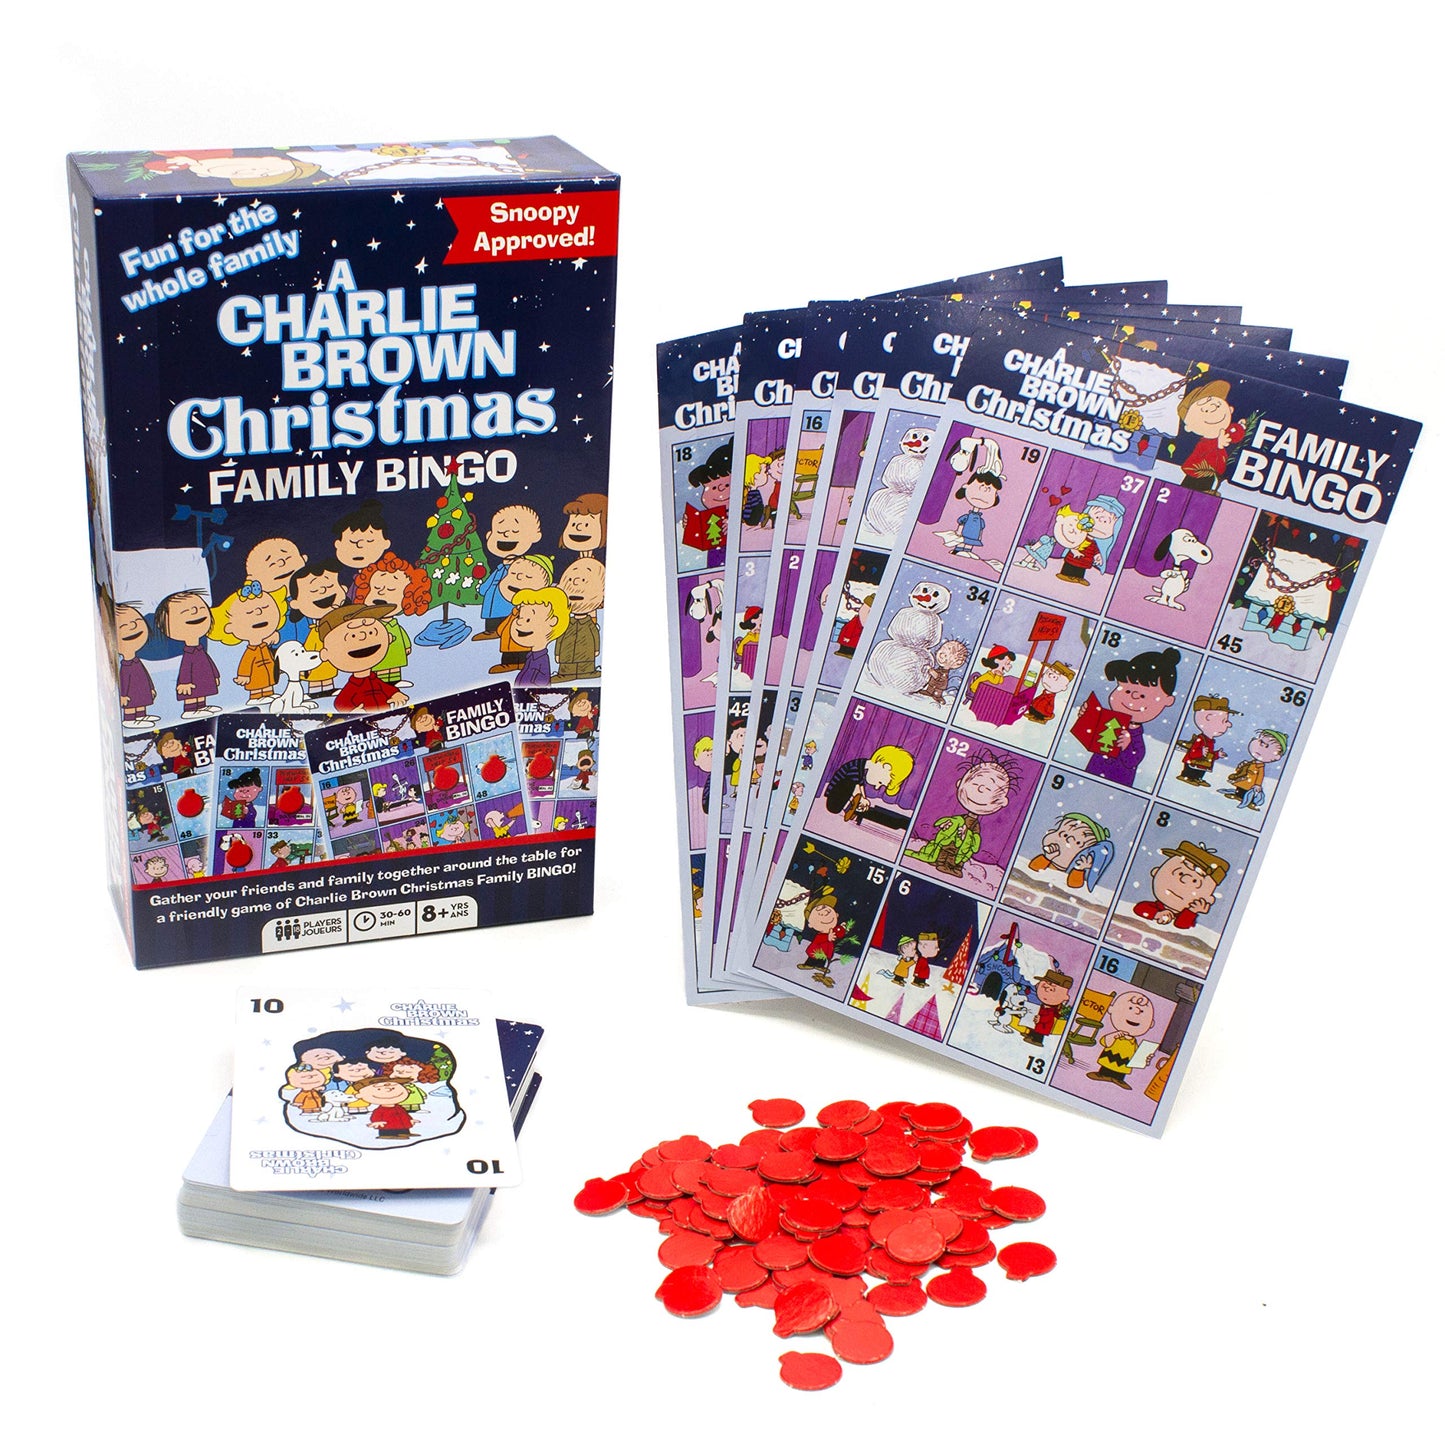 AQUARIUS Peanuts Charlie Brown Christmas Family Bingo Game Set